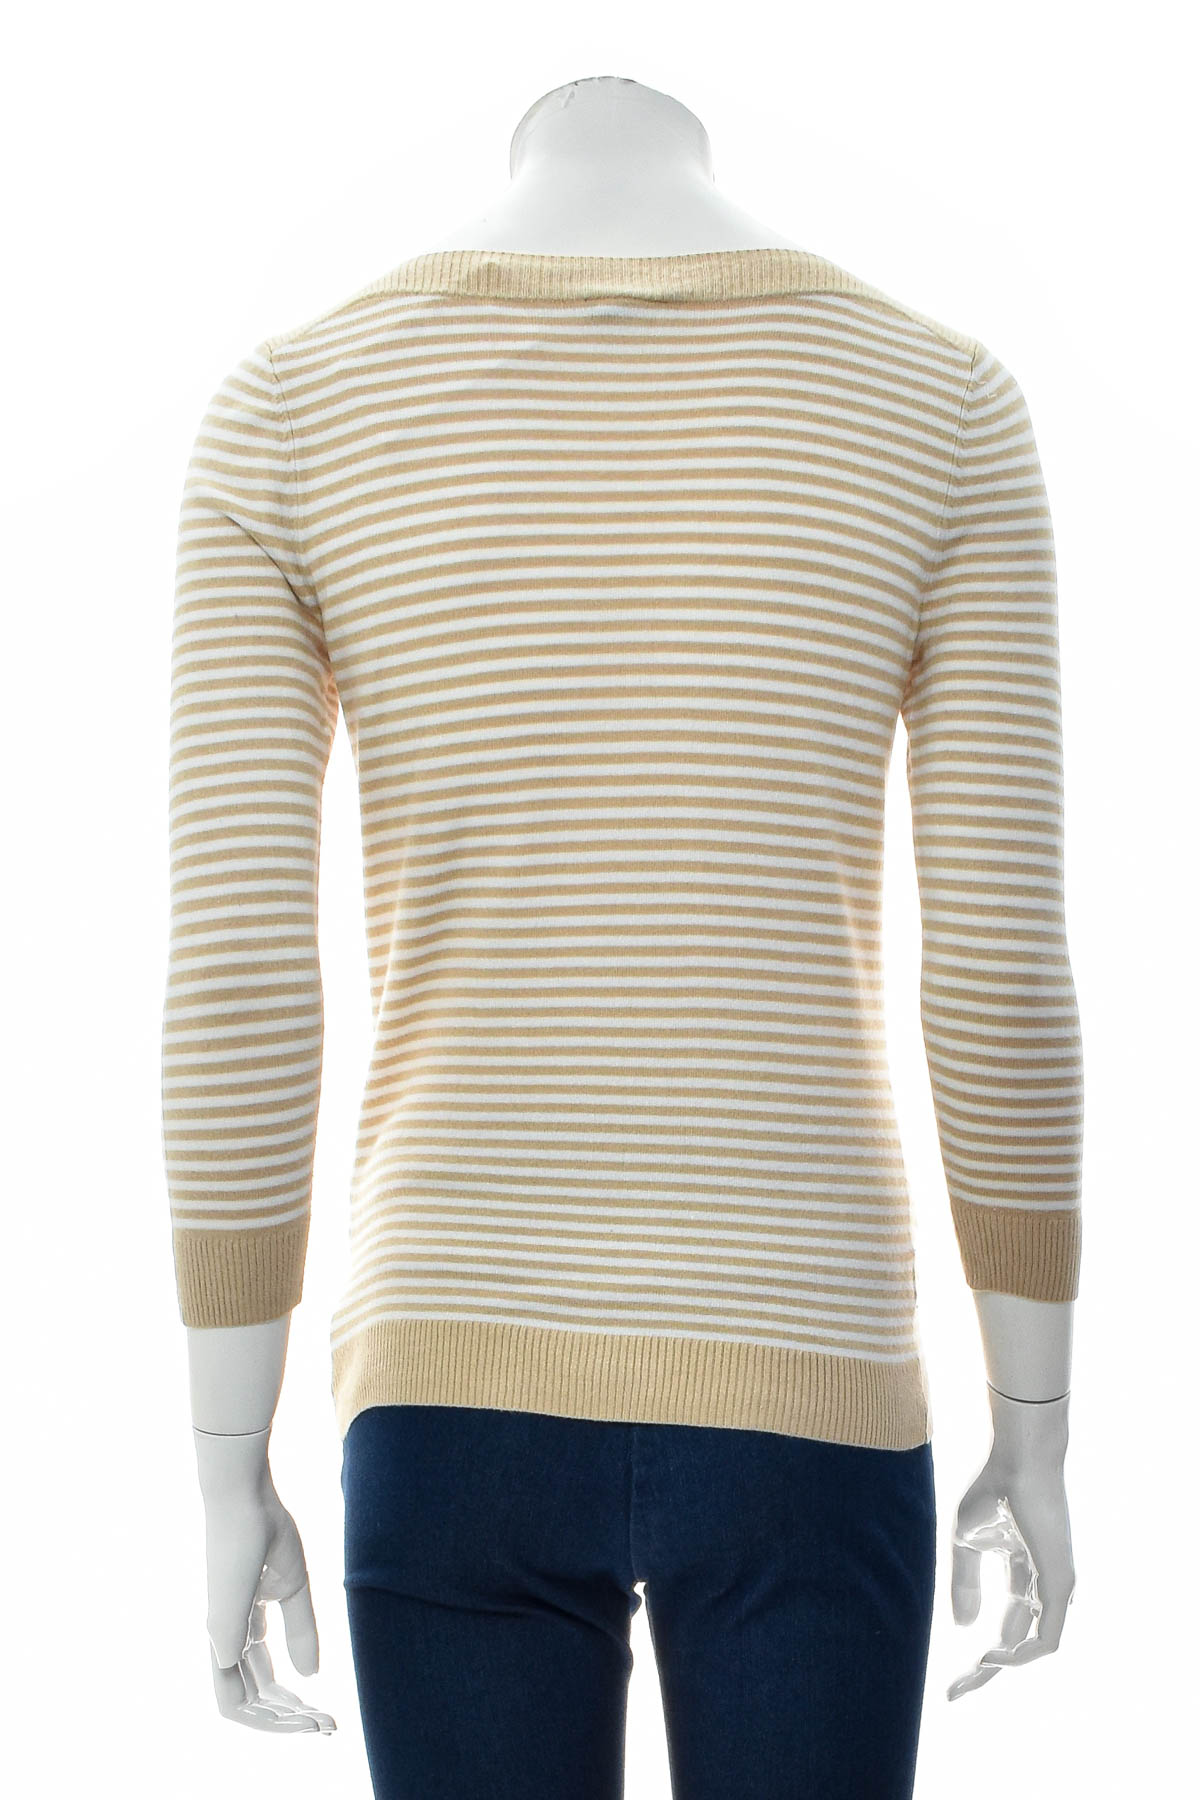 Women's sweater - Ann Taylor - 1